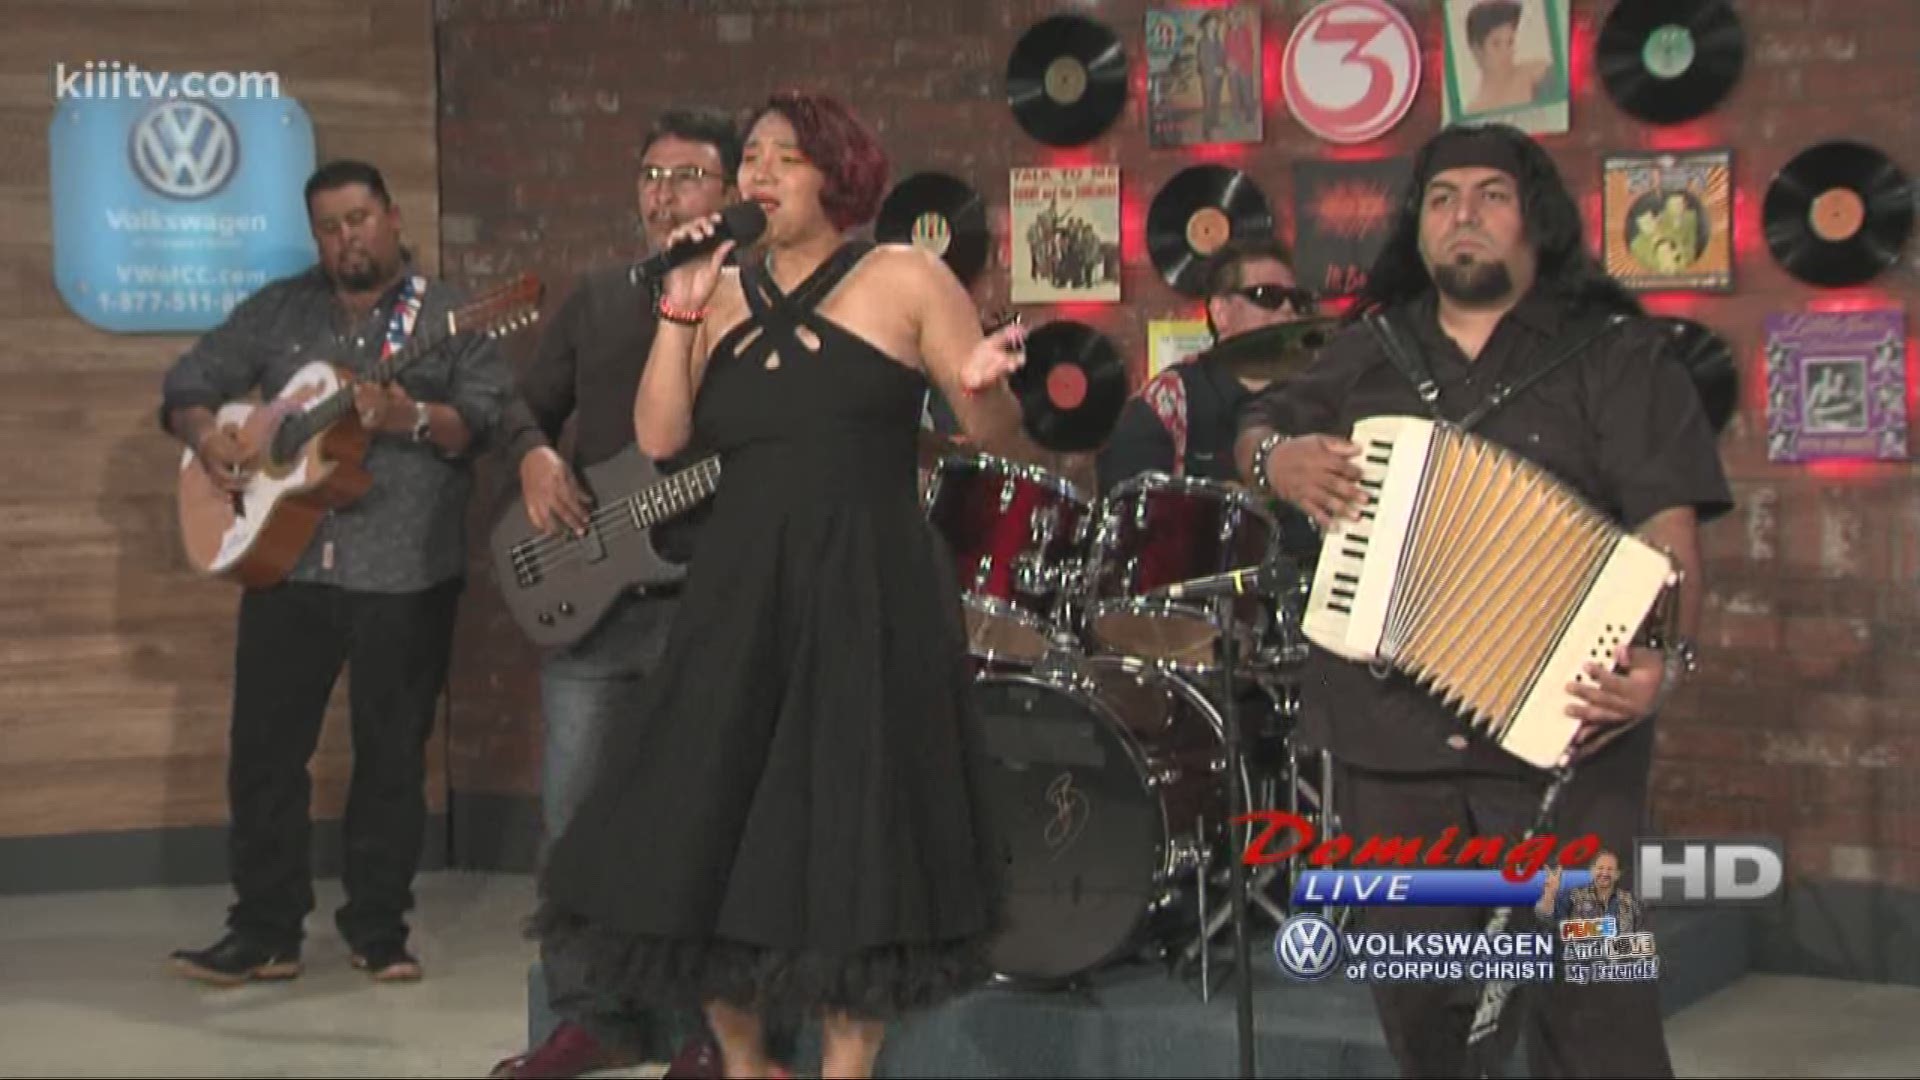 Veronique Medrano performing "Tamale Man" on Domingo Live.